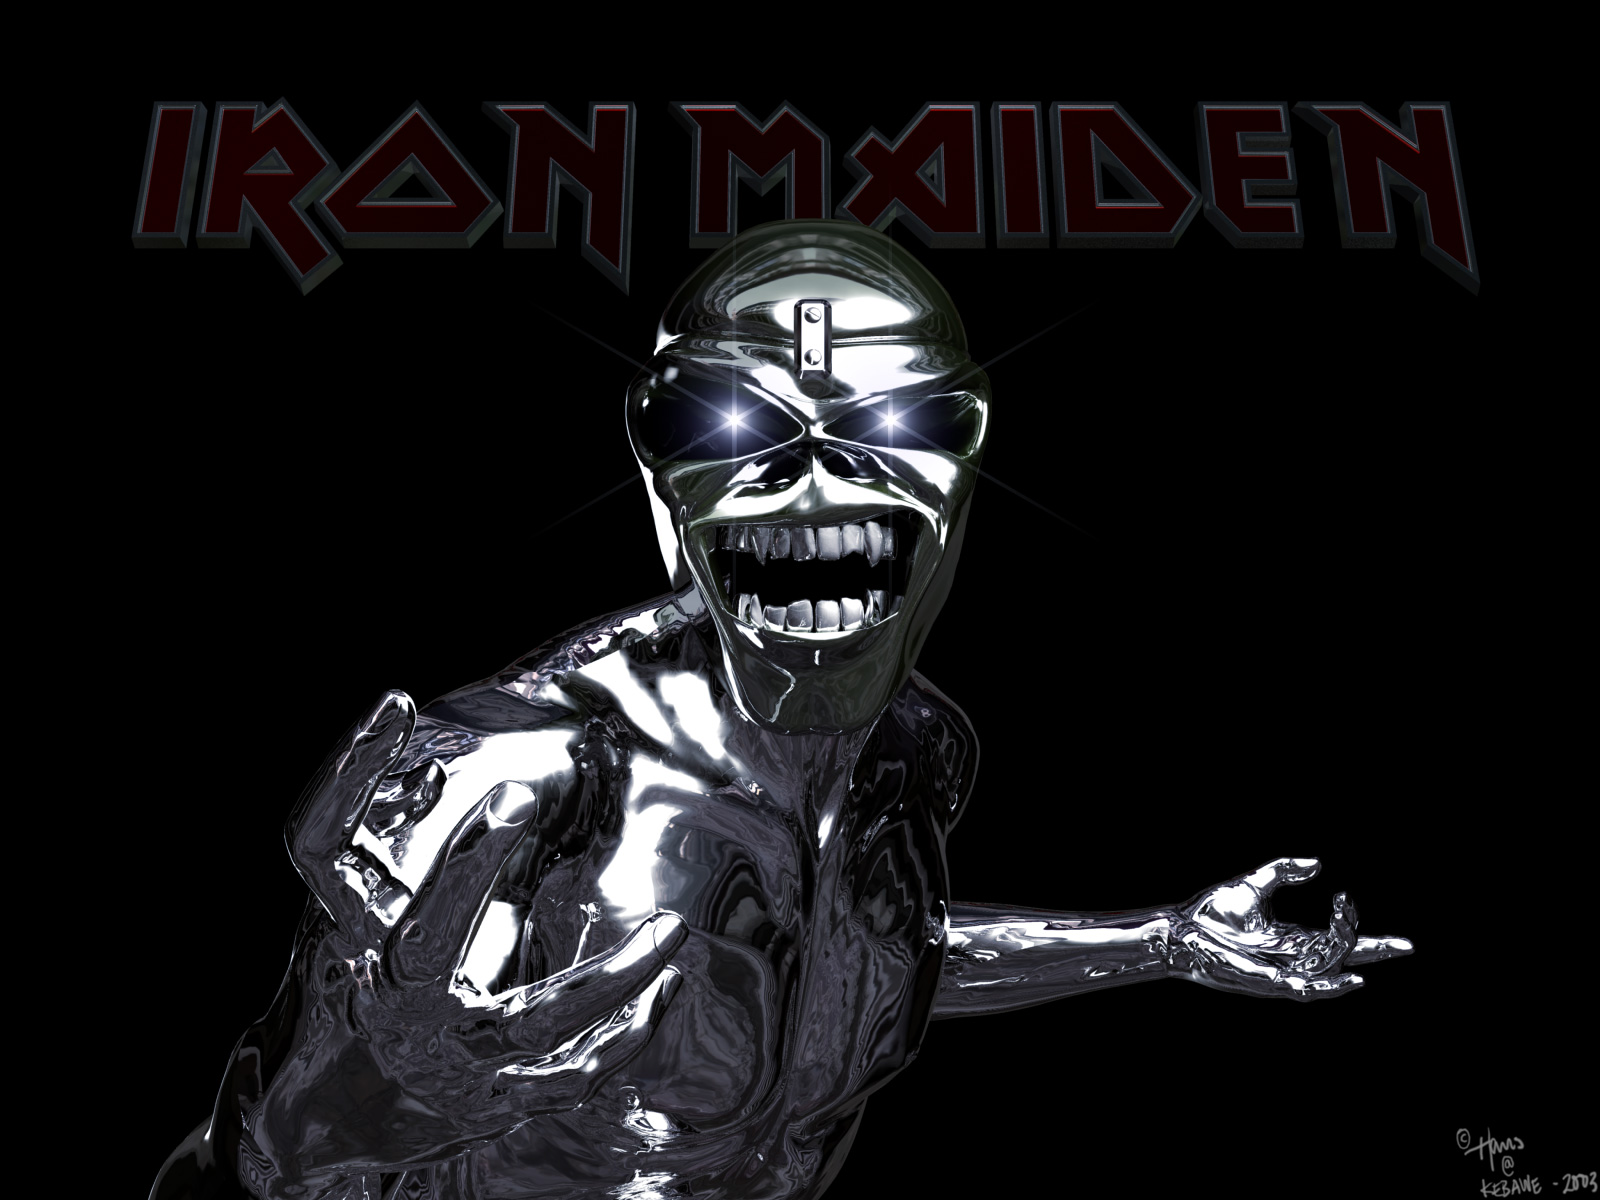 Metal Music Wallpaper Iron Maiden